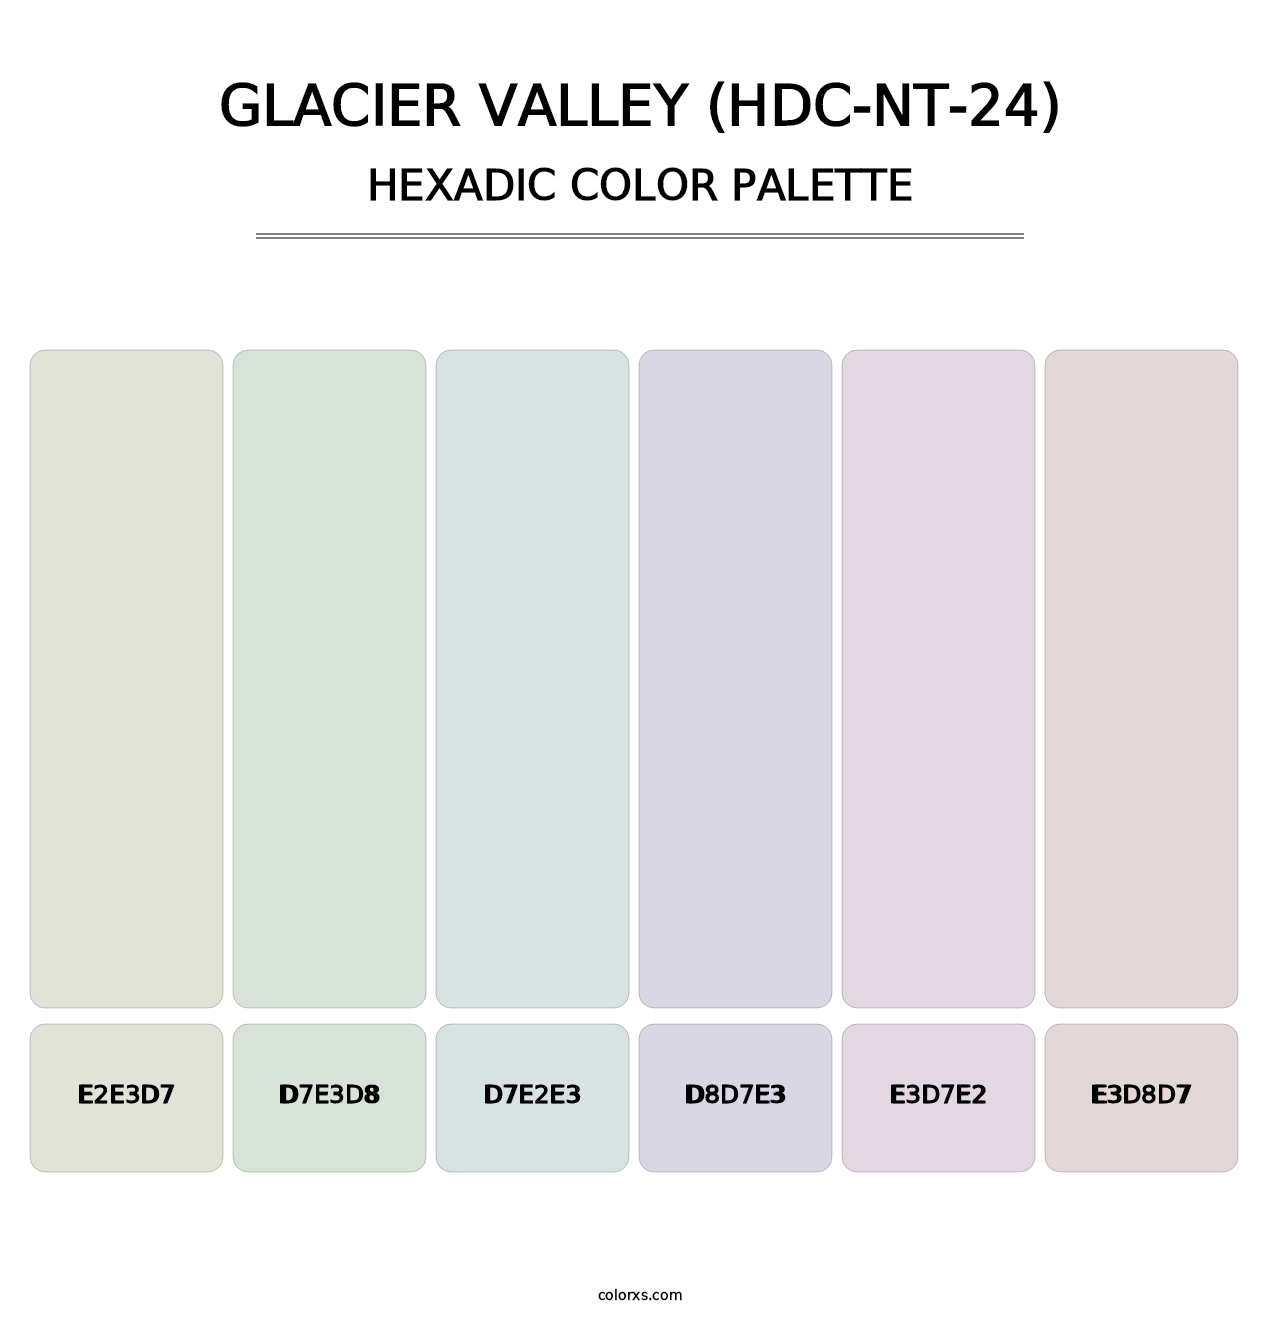 Glacier Valley (HDC-NT-24) - Hexadic Color Palette